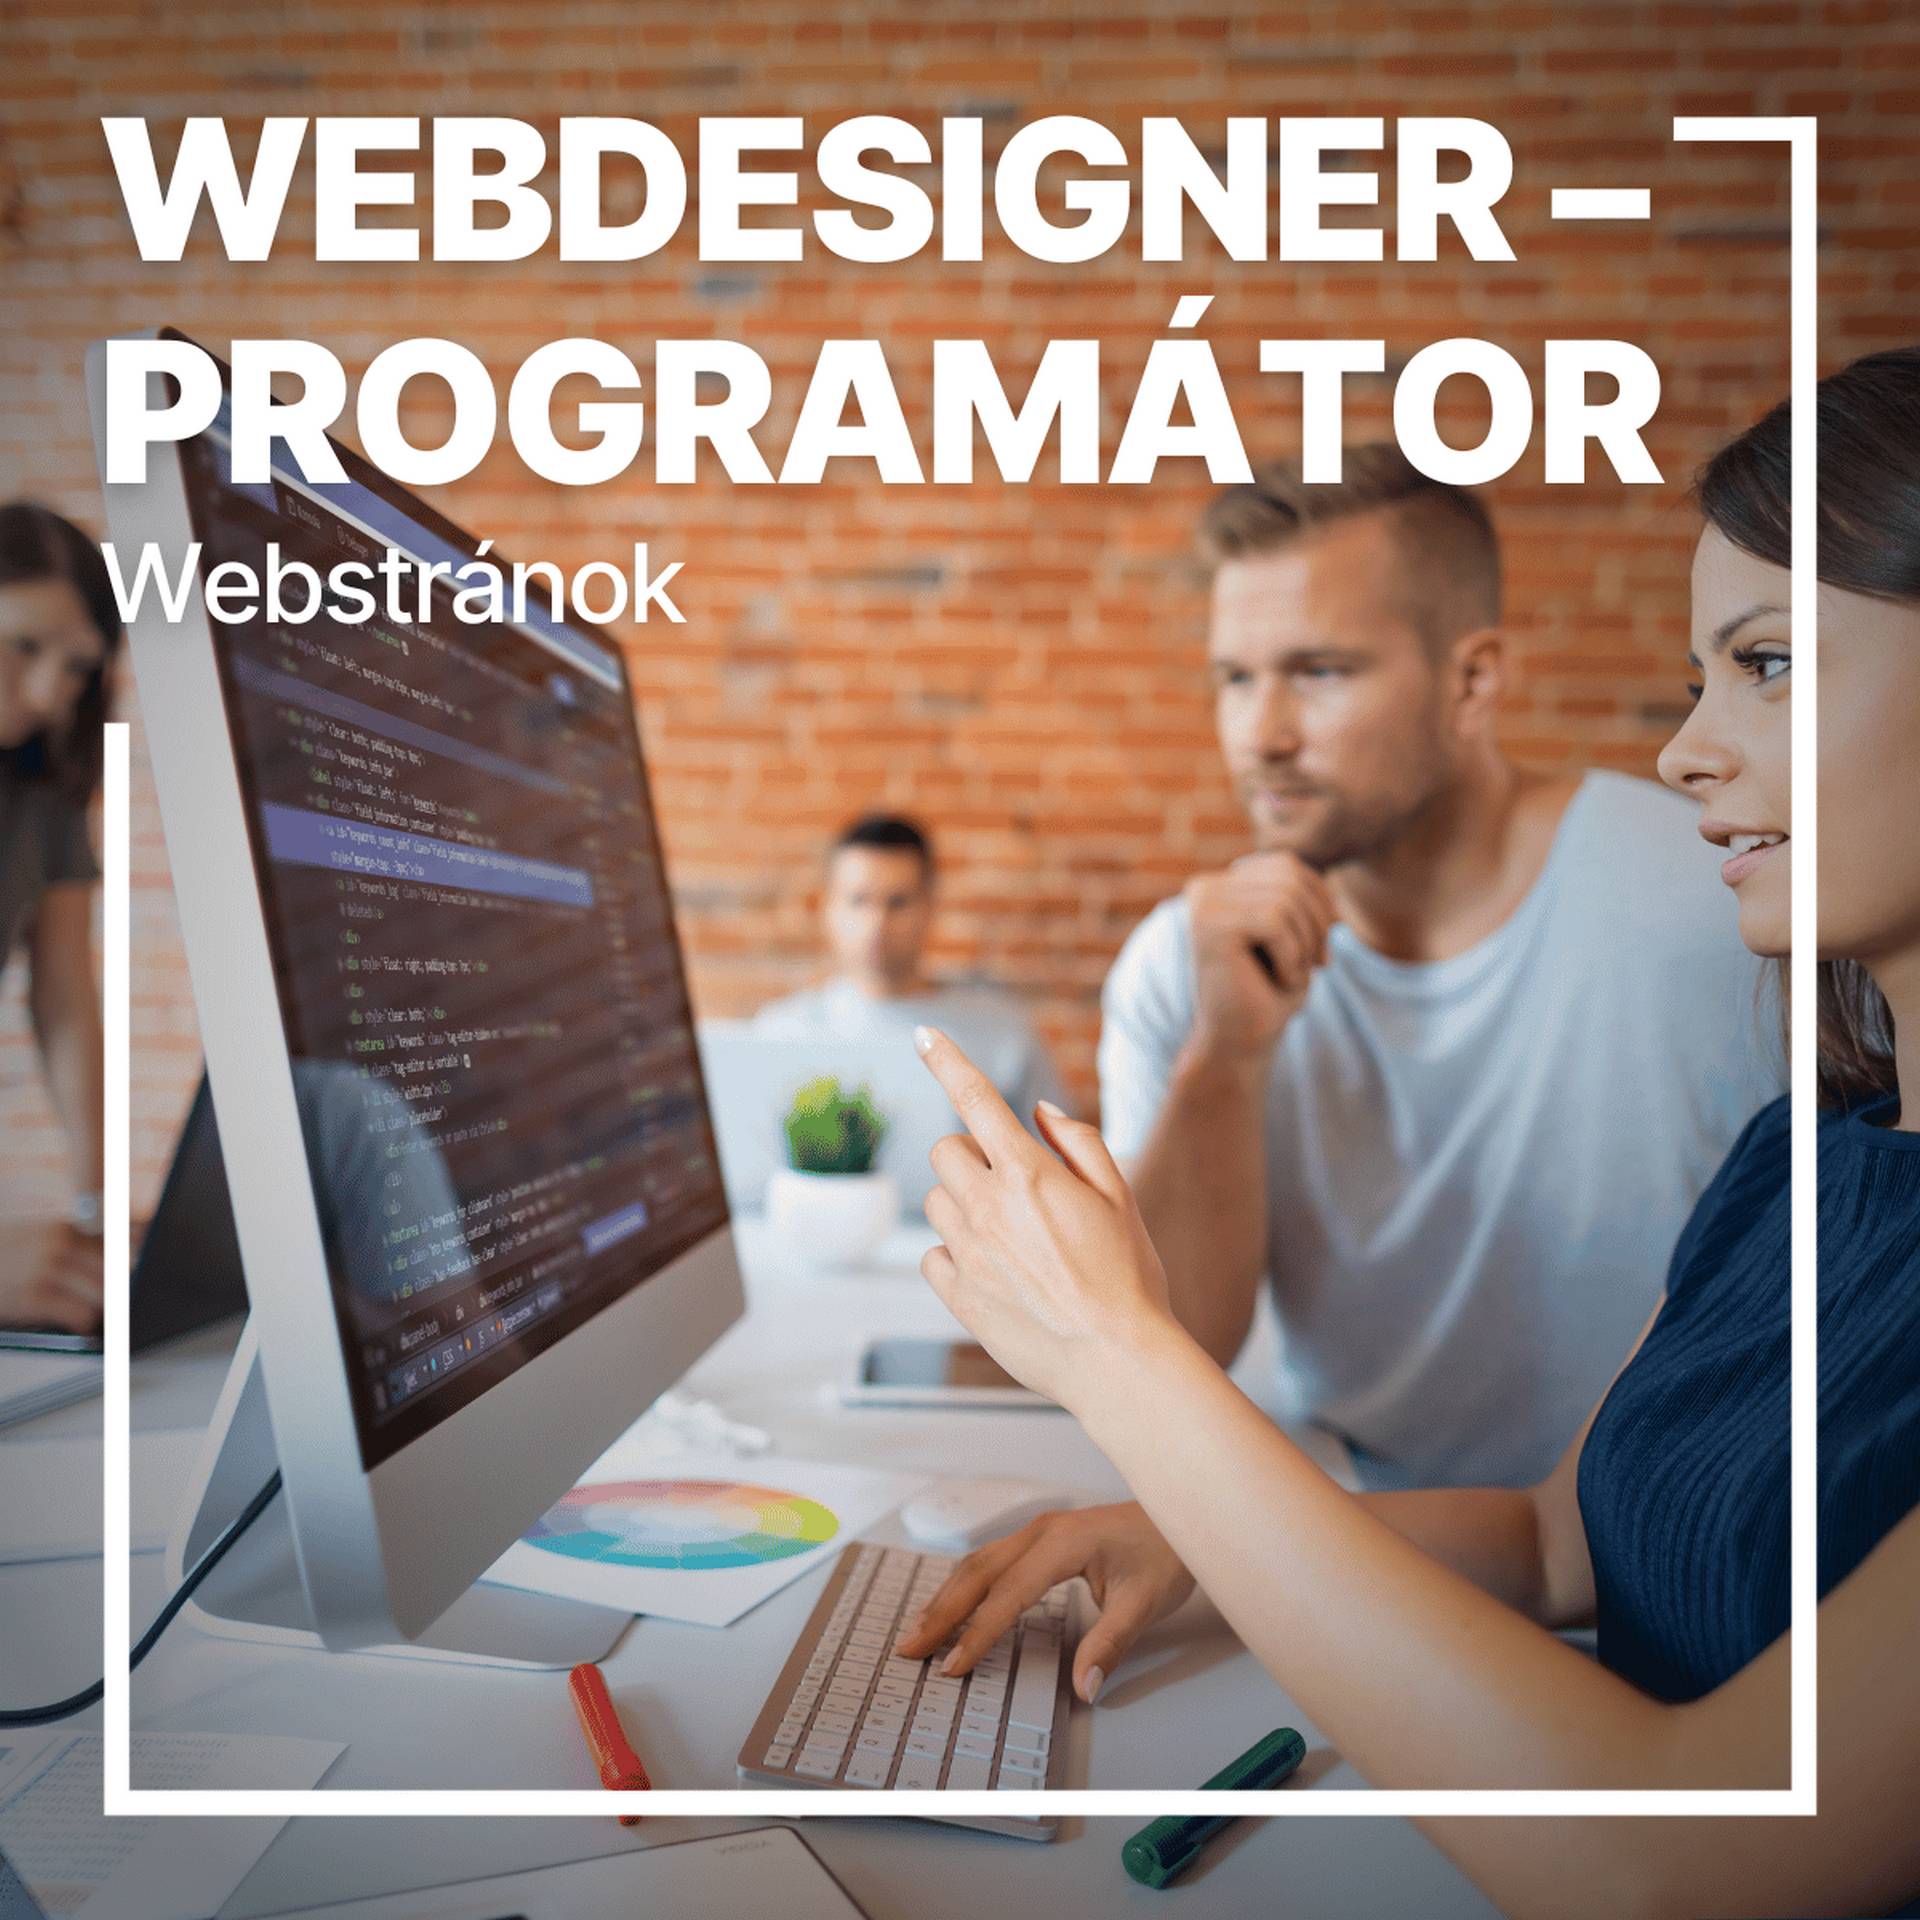 Webdesigner - Programator webstranok - Global Education Centre